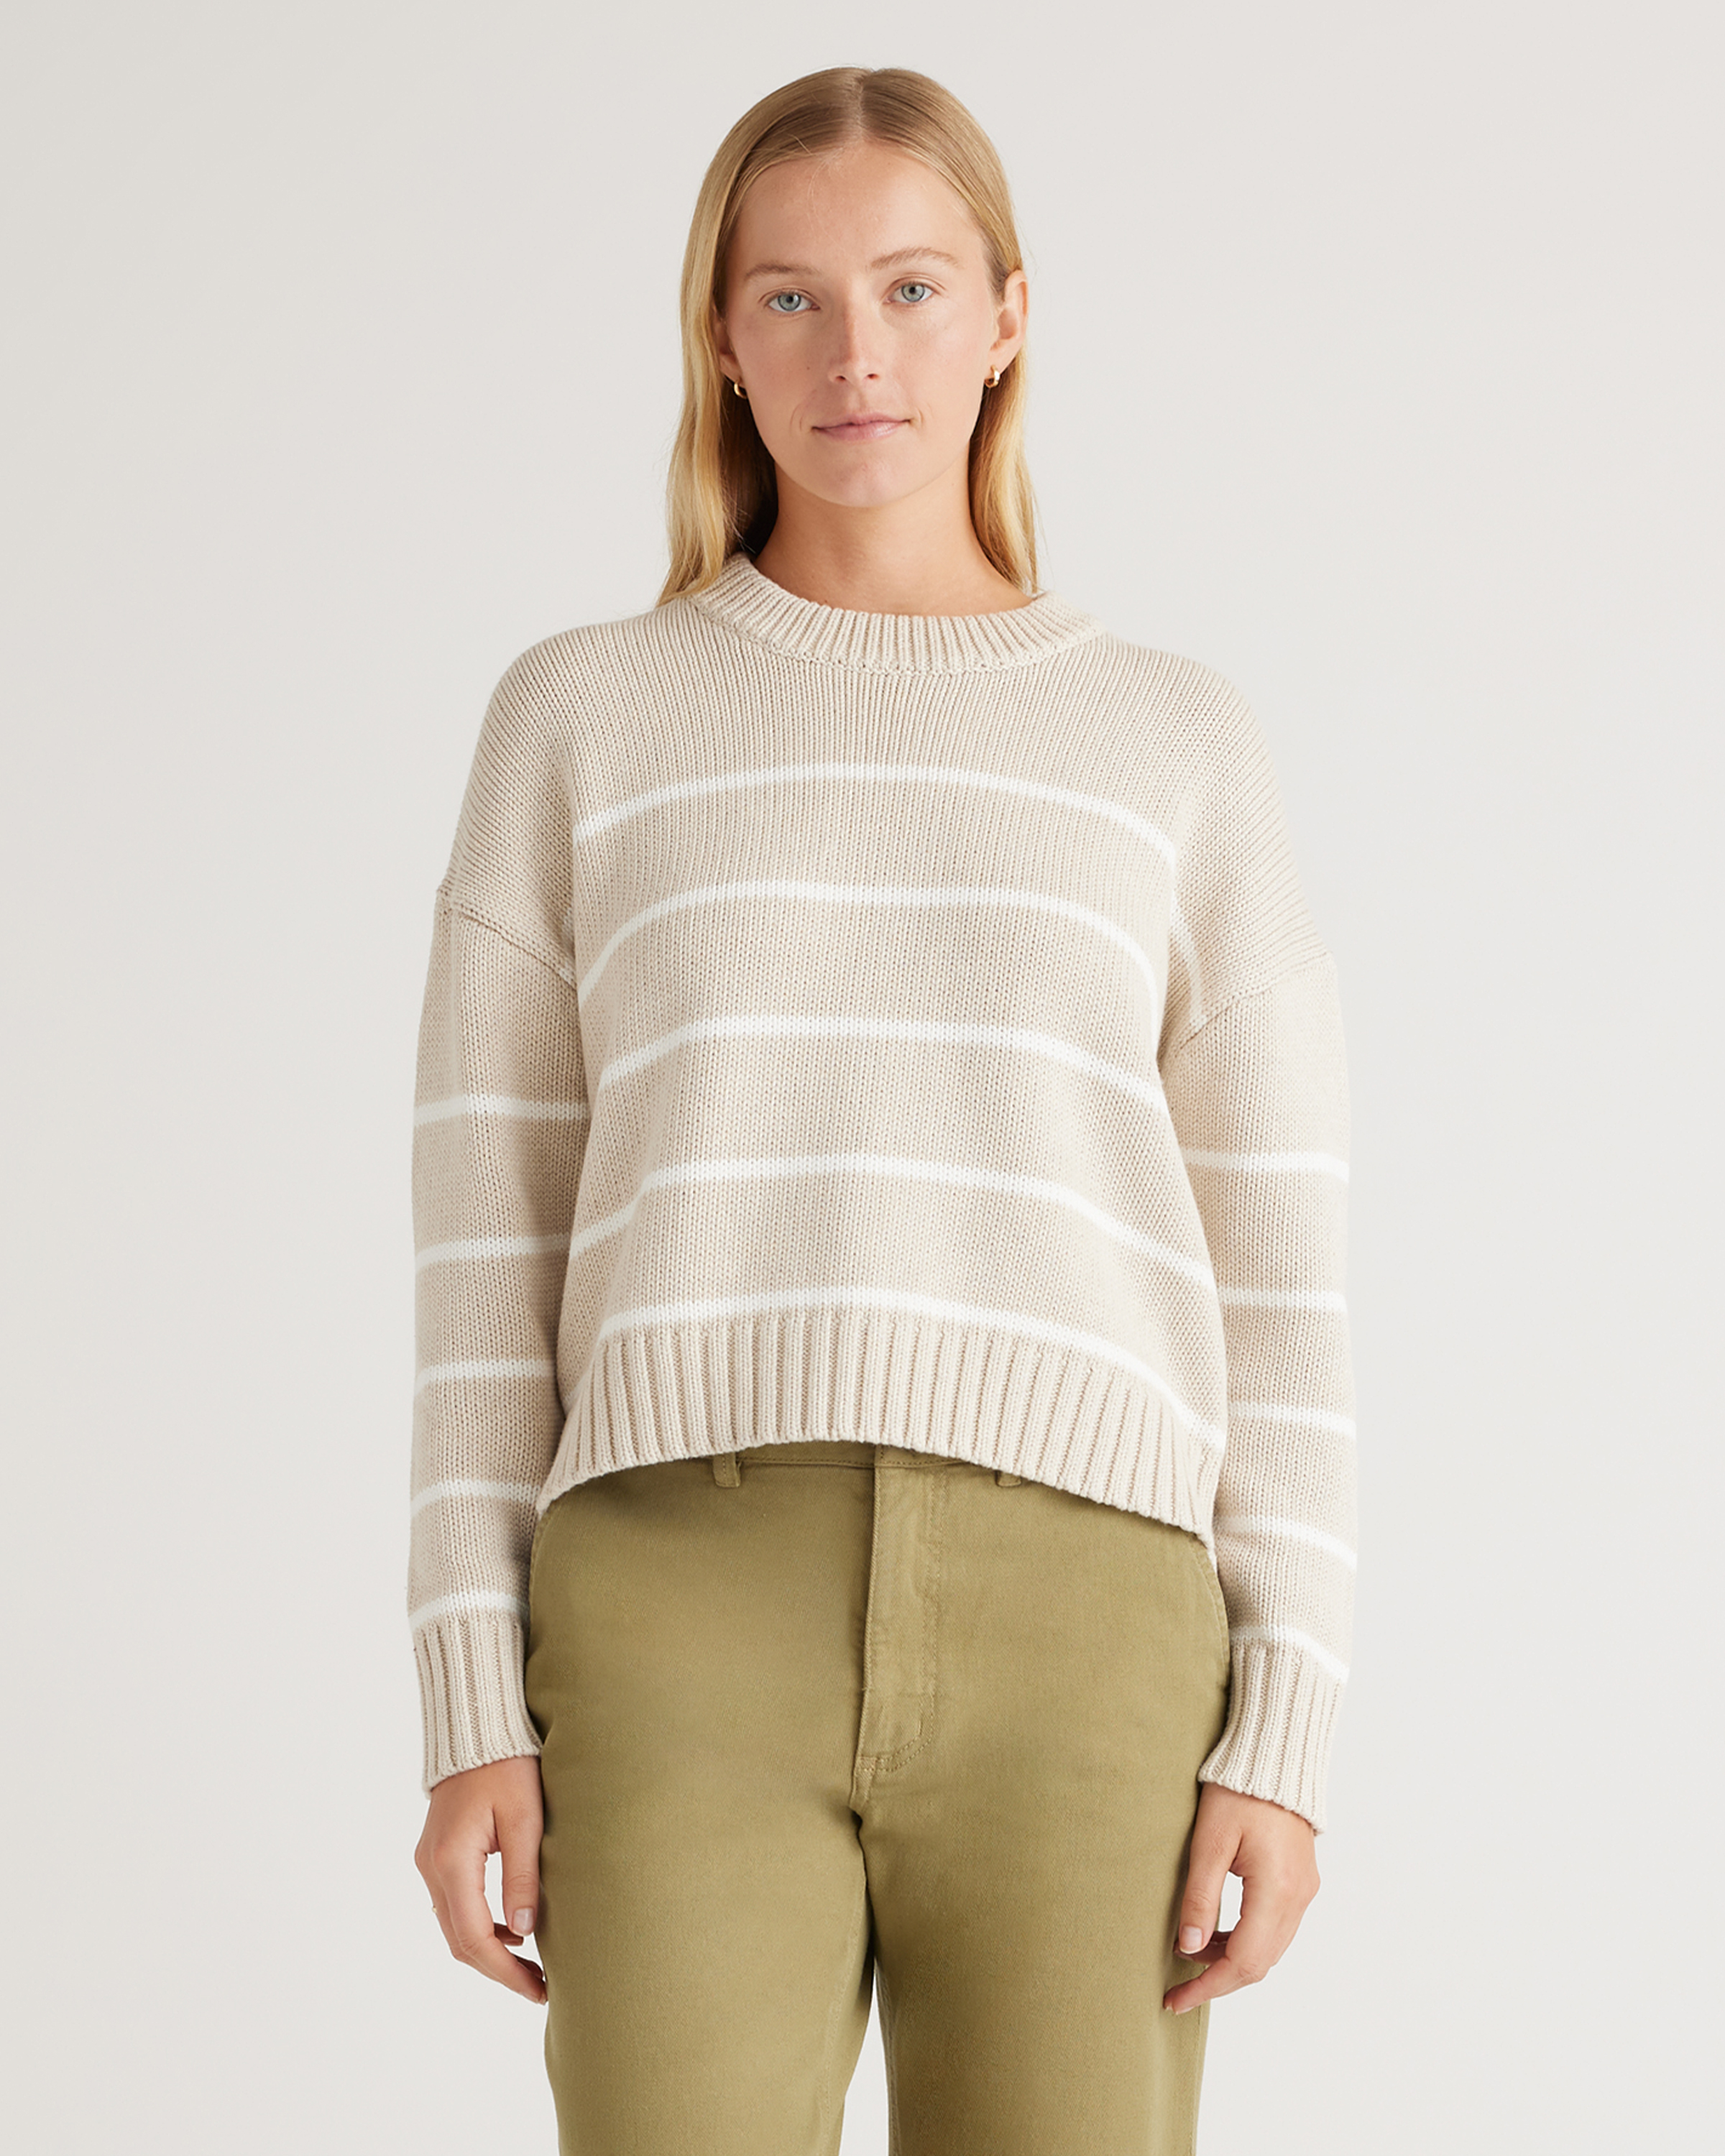 100% Organic Cotton Striped Crew Sweater